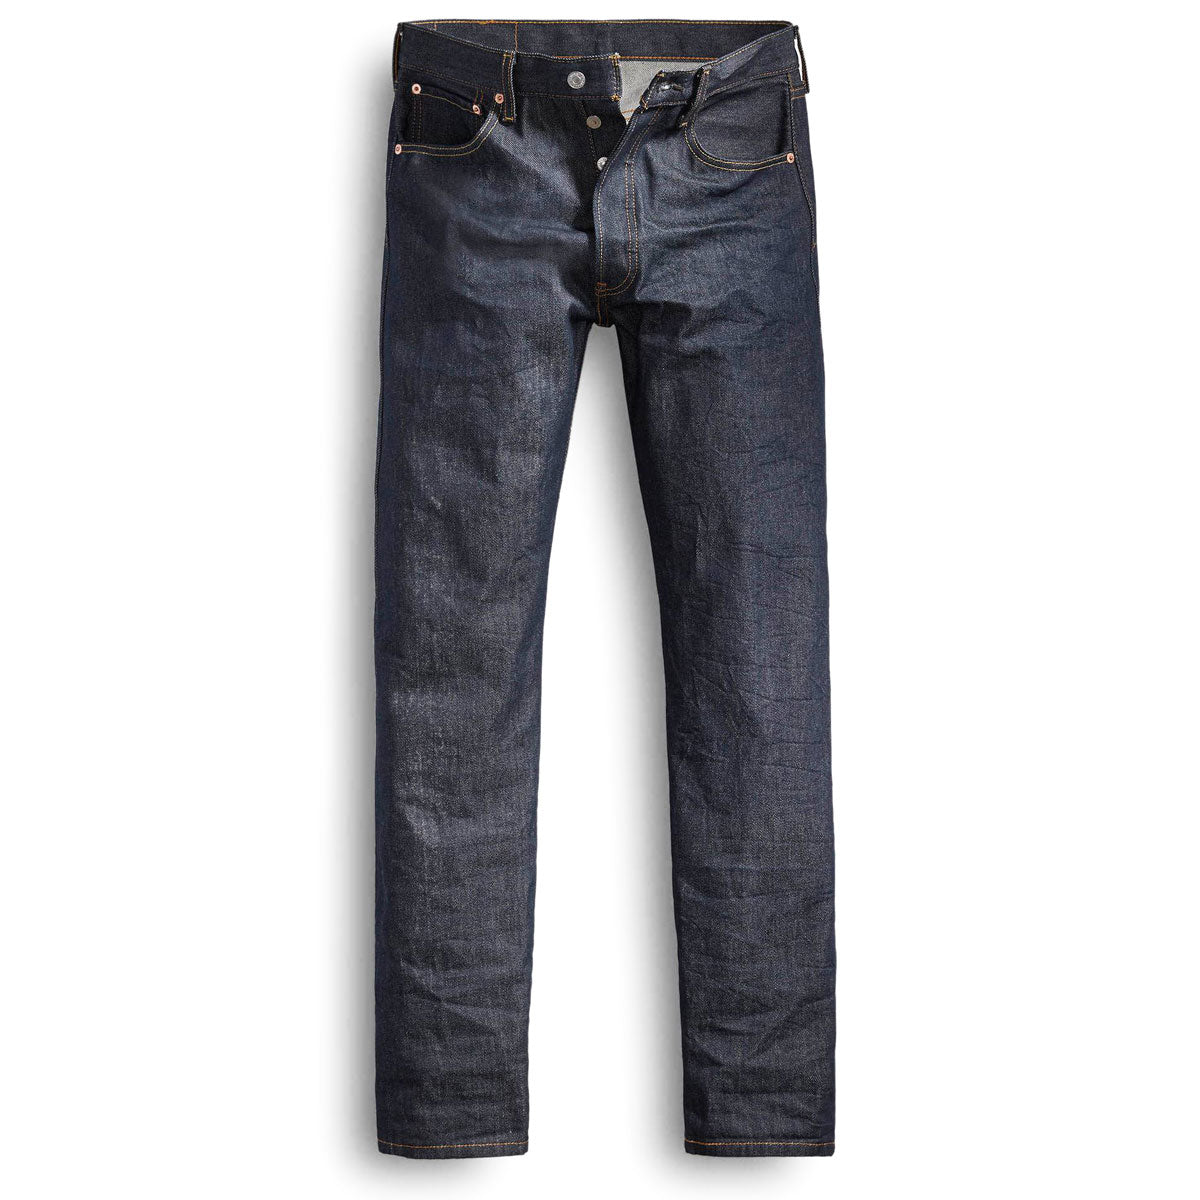 Levi's 501 Original Jeans - Rigid Stf image 3